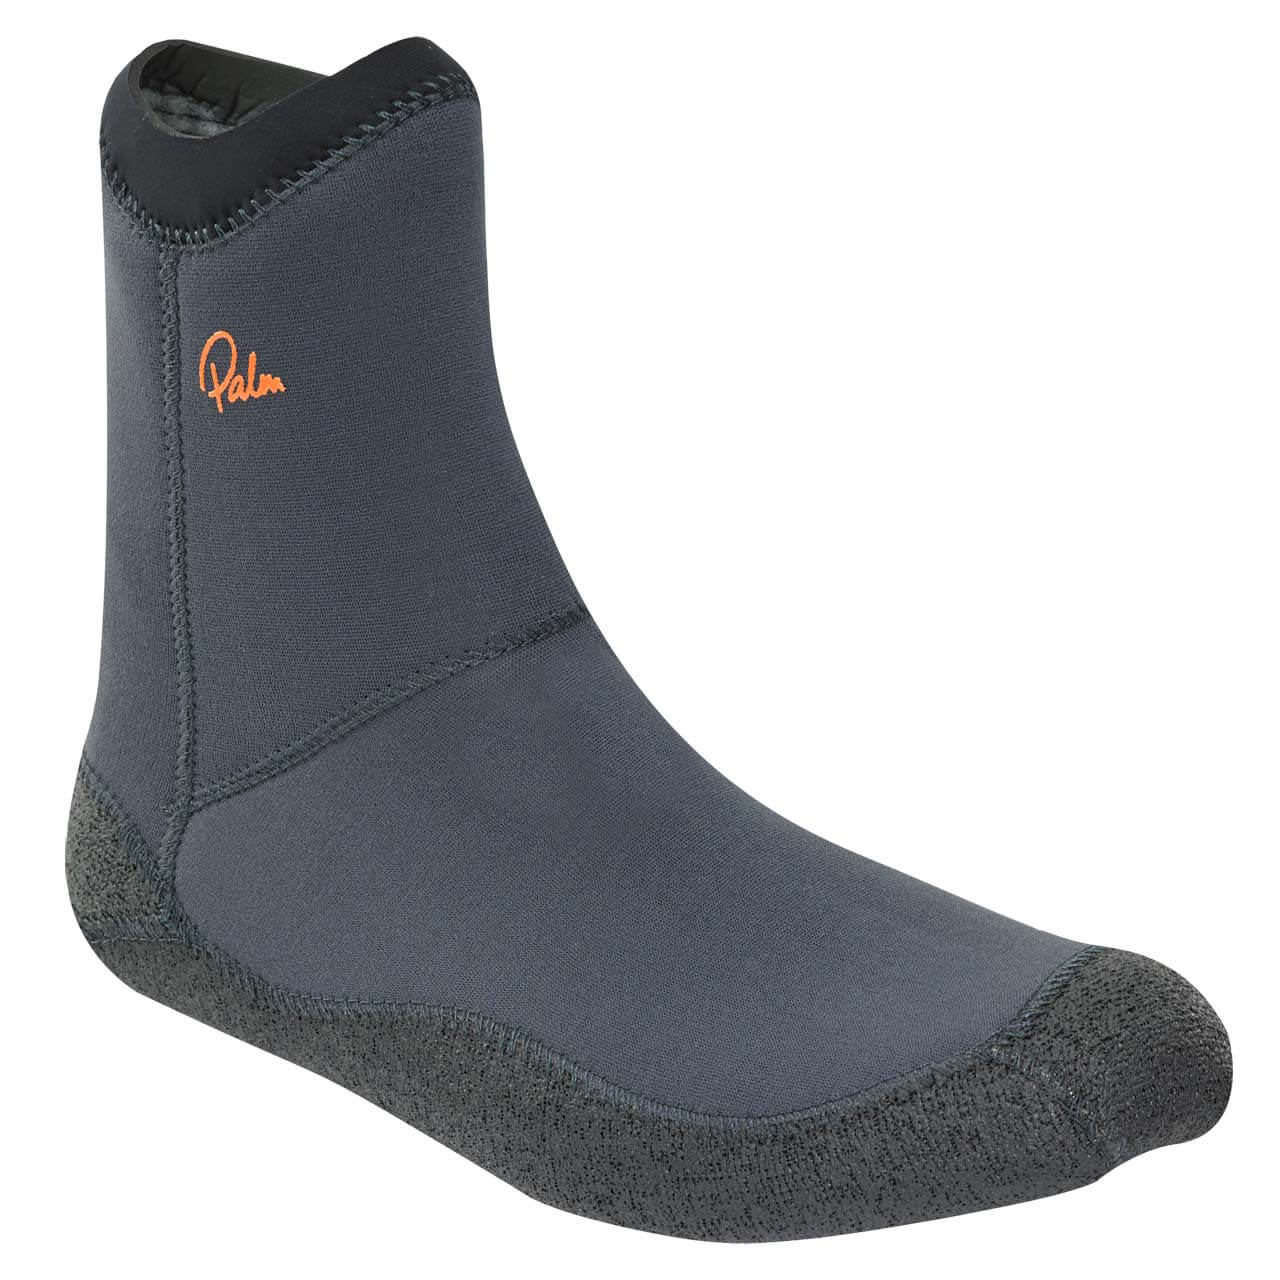 Palm Stomp Socks - Jet Grey, XL